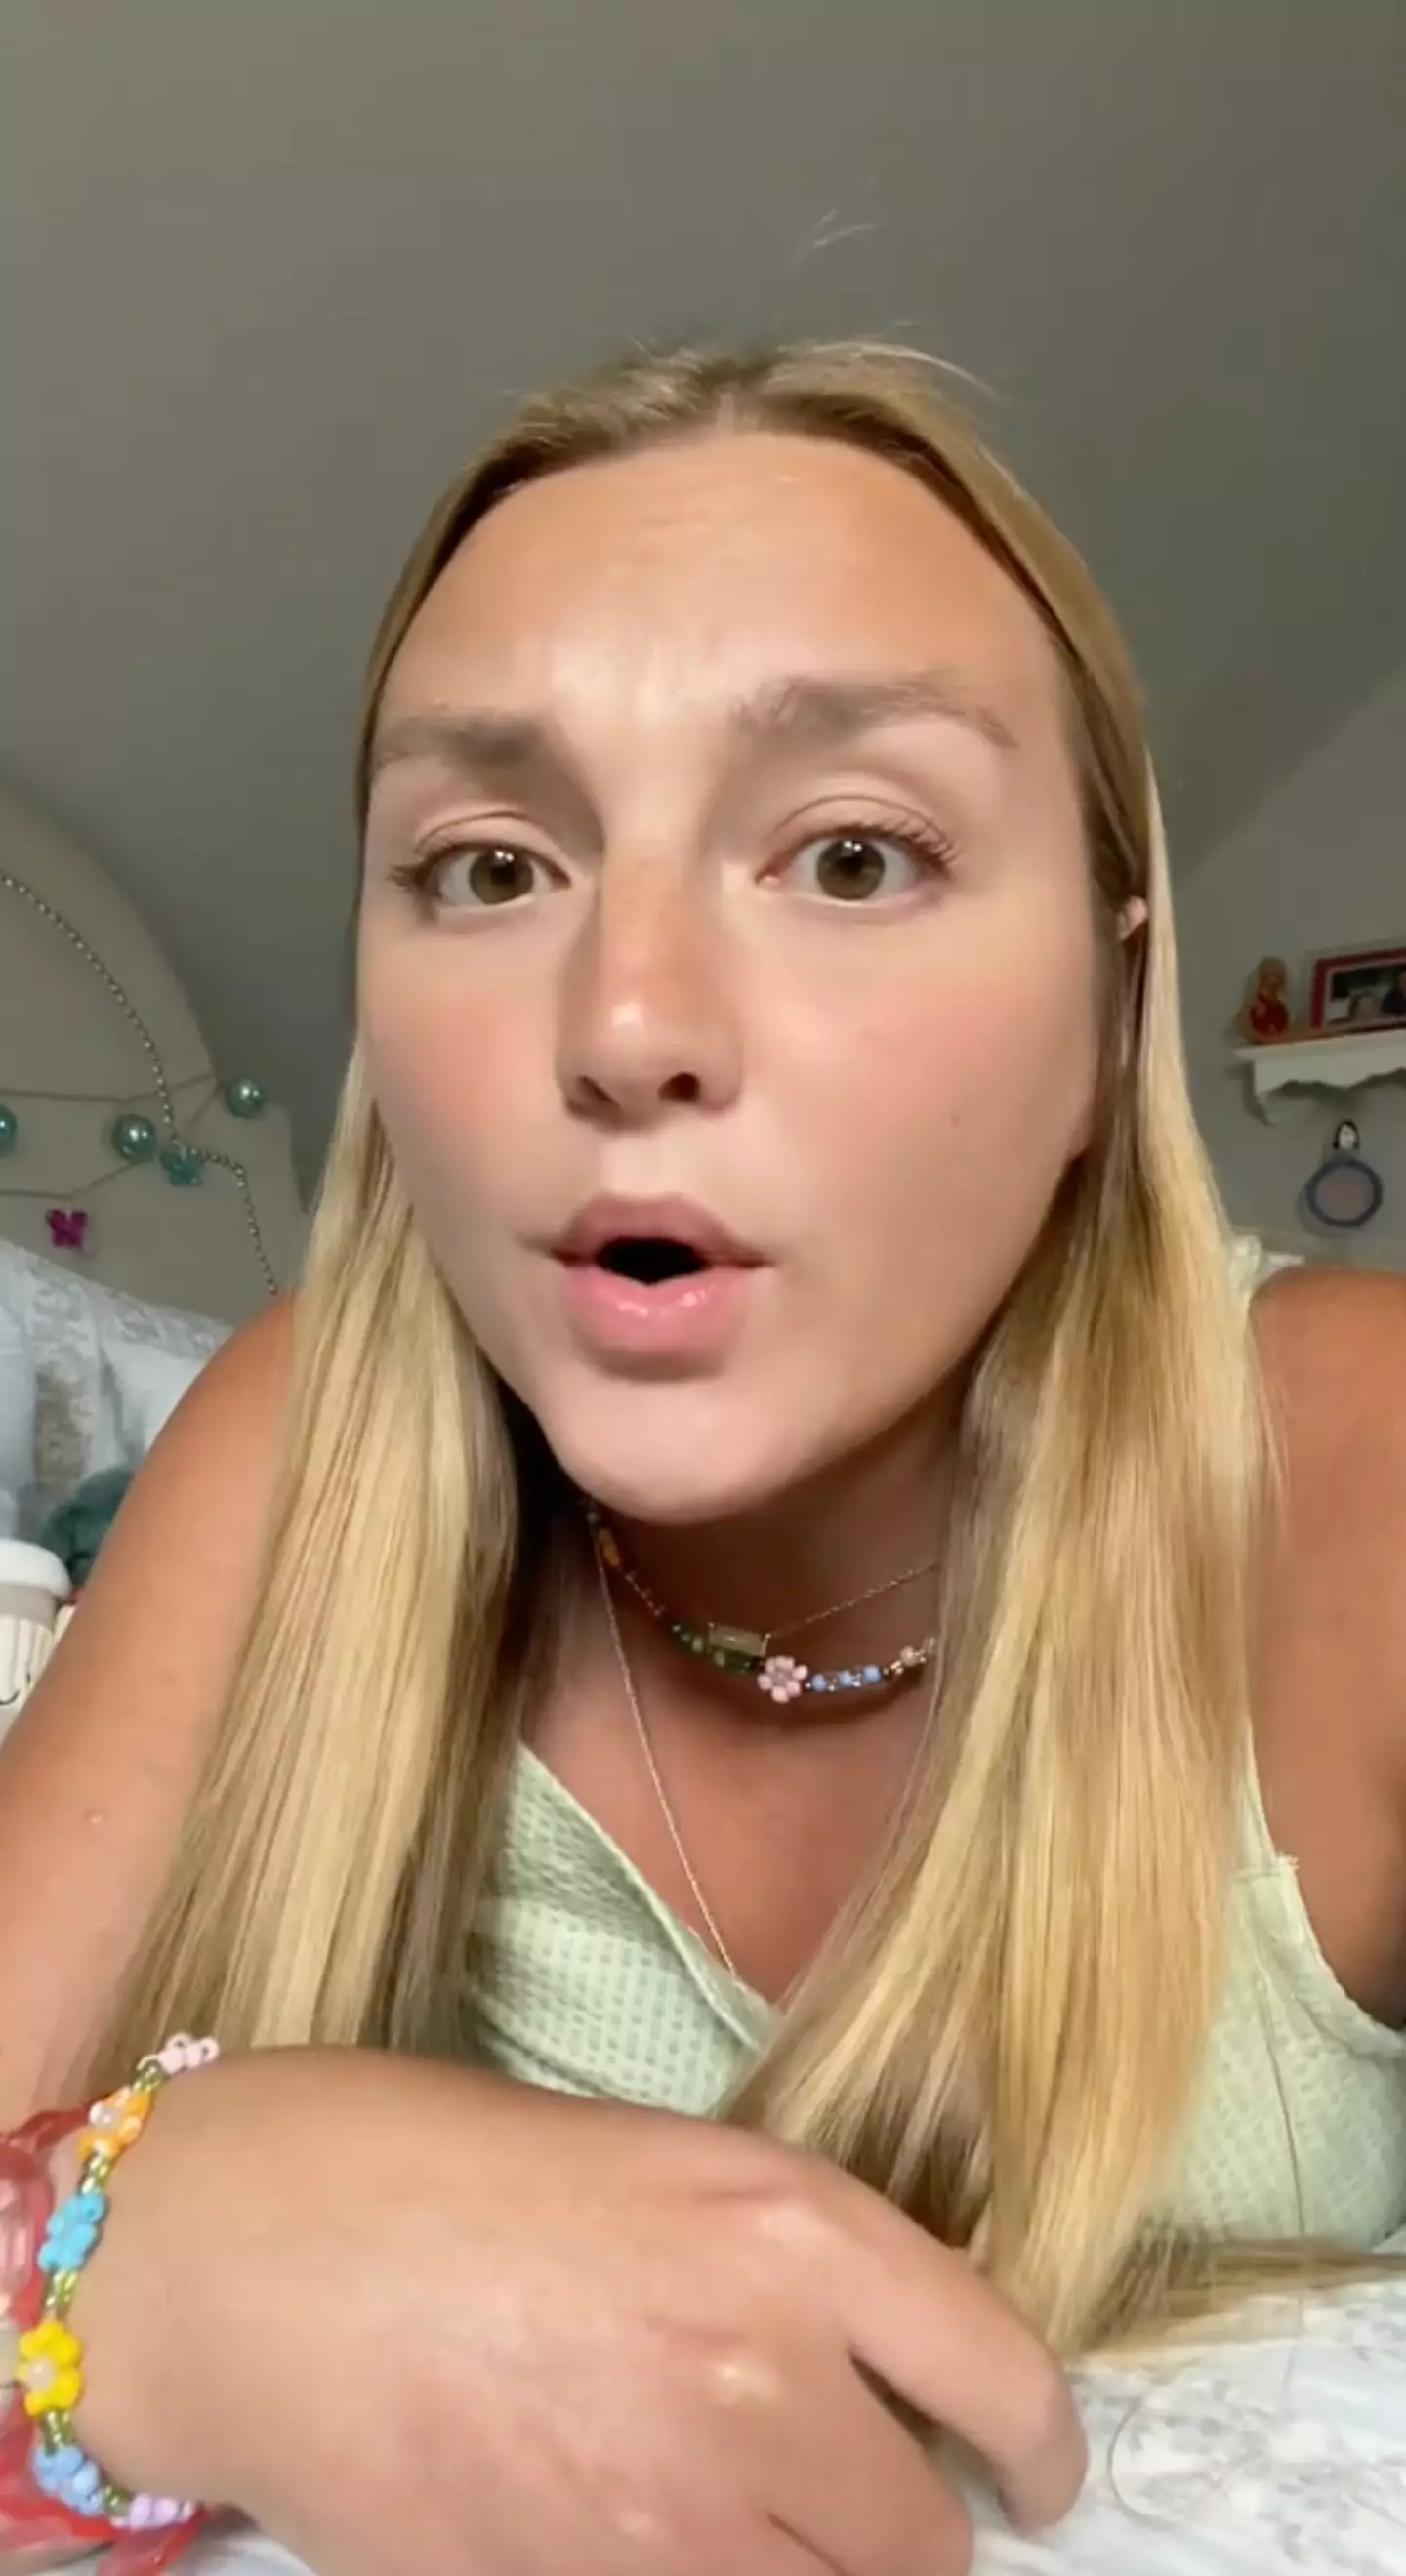 Jenna's TikTok video has sent the internet into a frenzy.